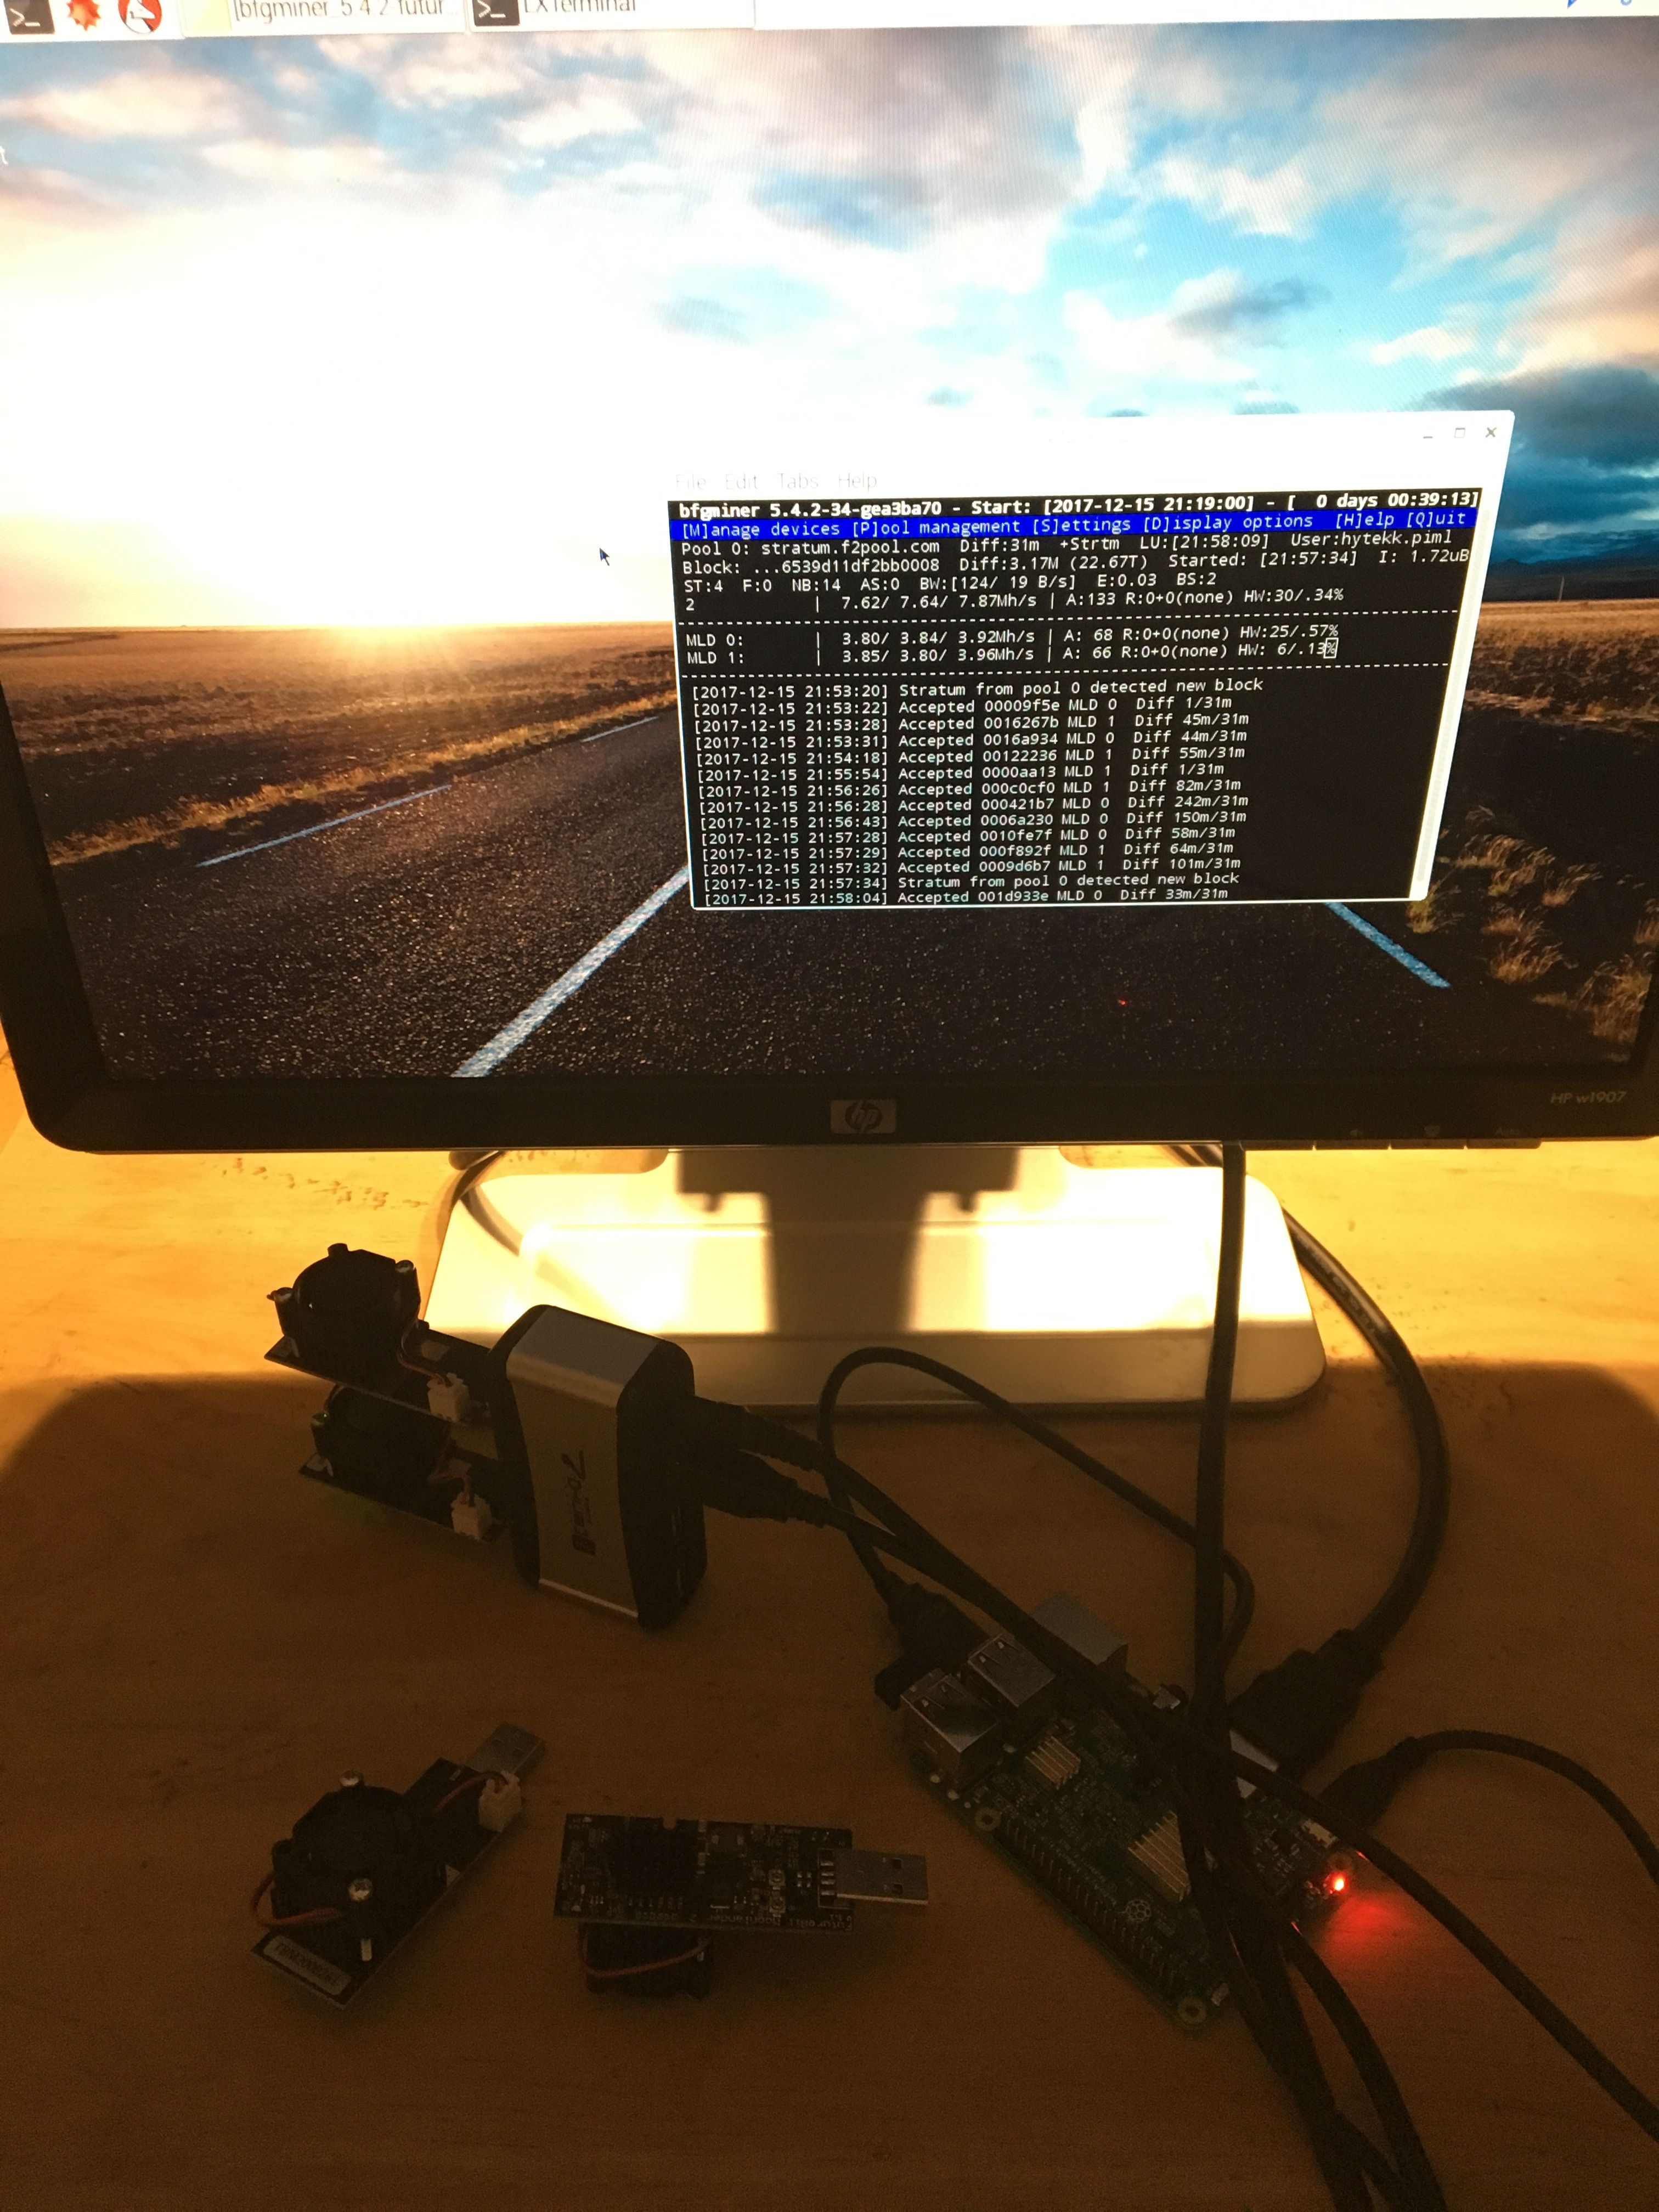 Moonlander 2 USB Stick ASIC Miner for Scrypt Litecoin Bitcoin